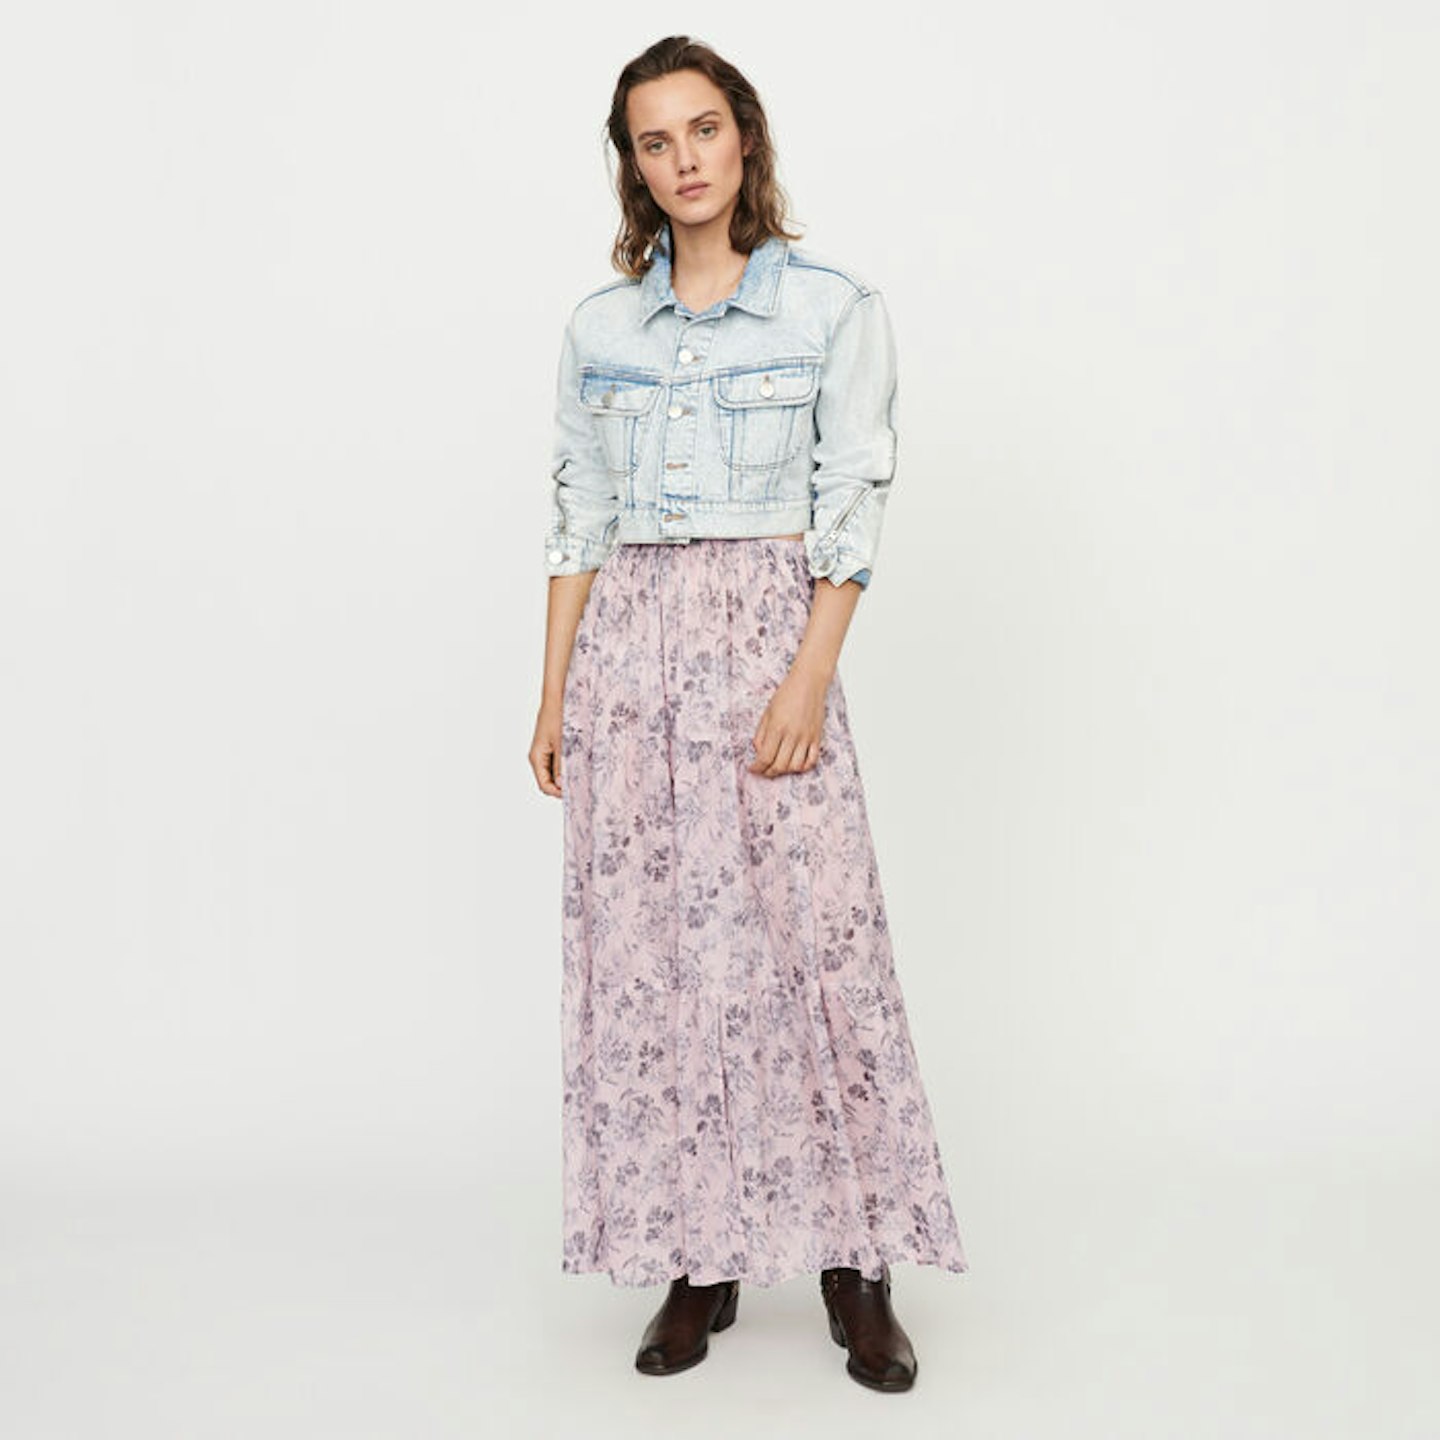 Floral Print Maxi Skirt, £185